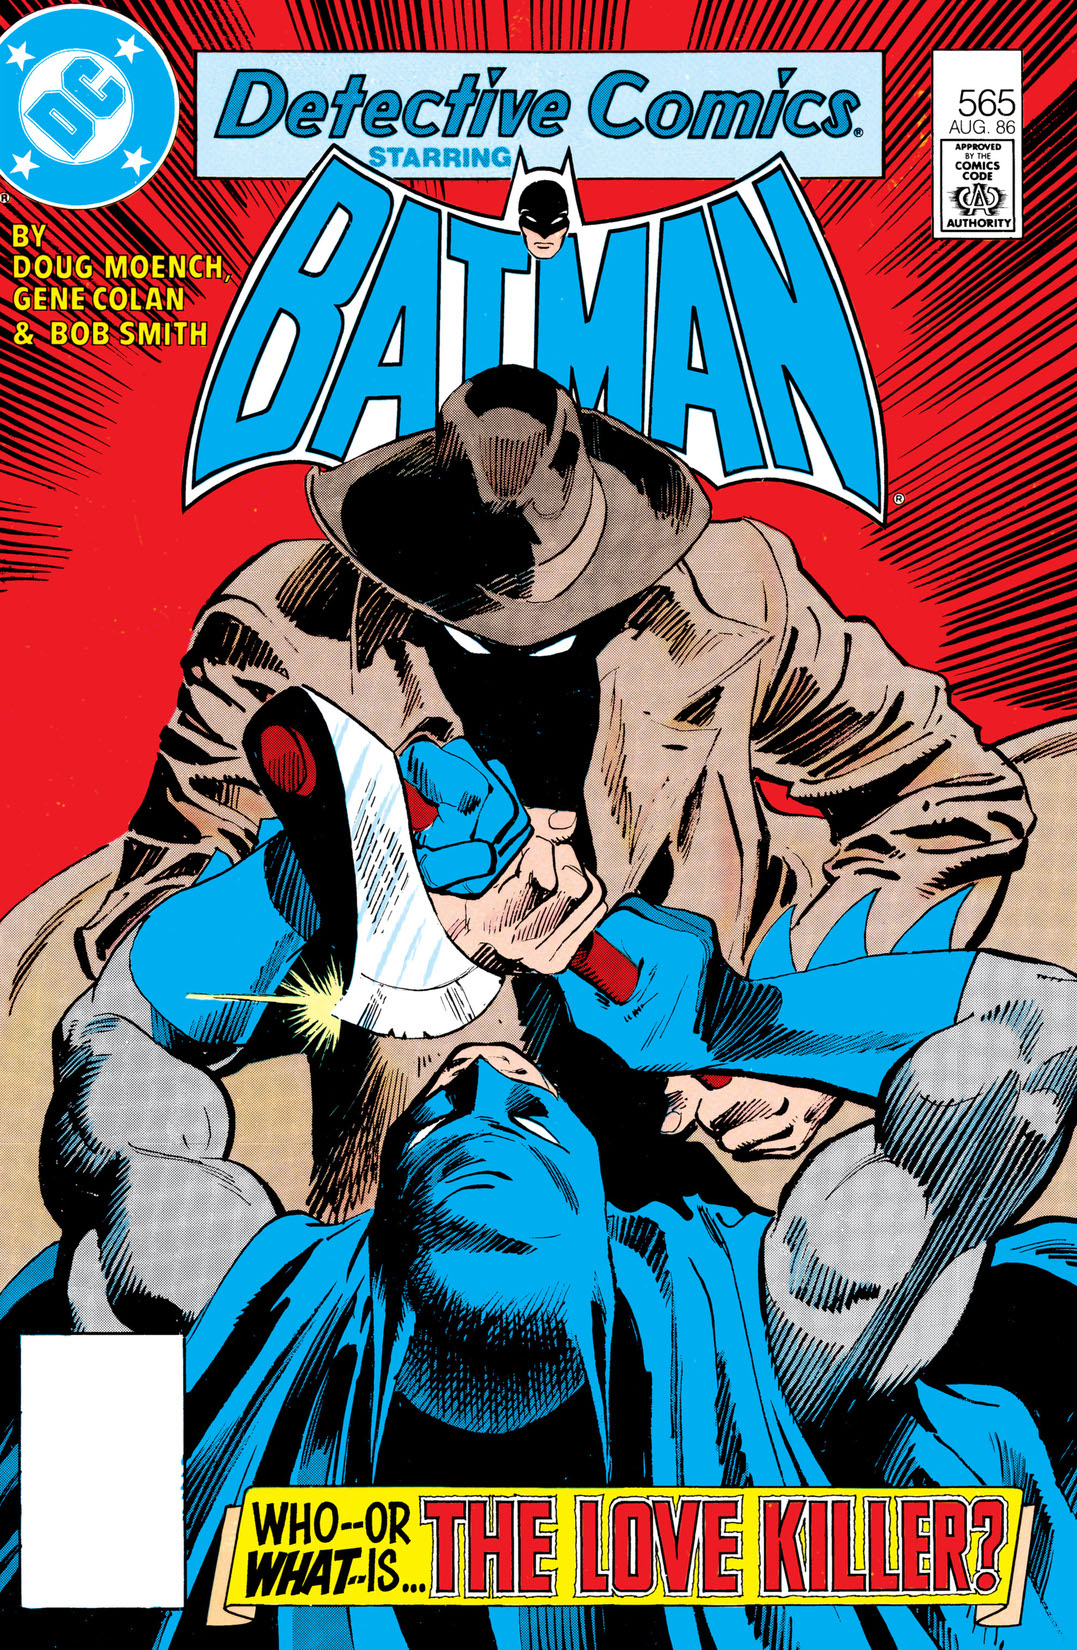 Detective Comics (1937-) #565 preview images